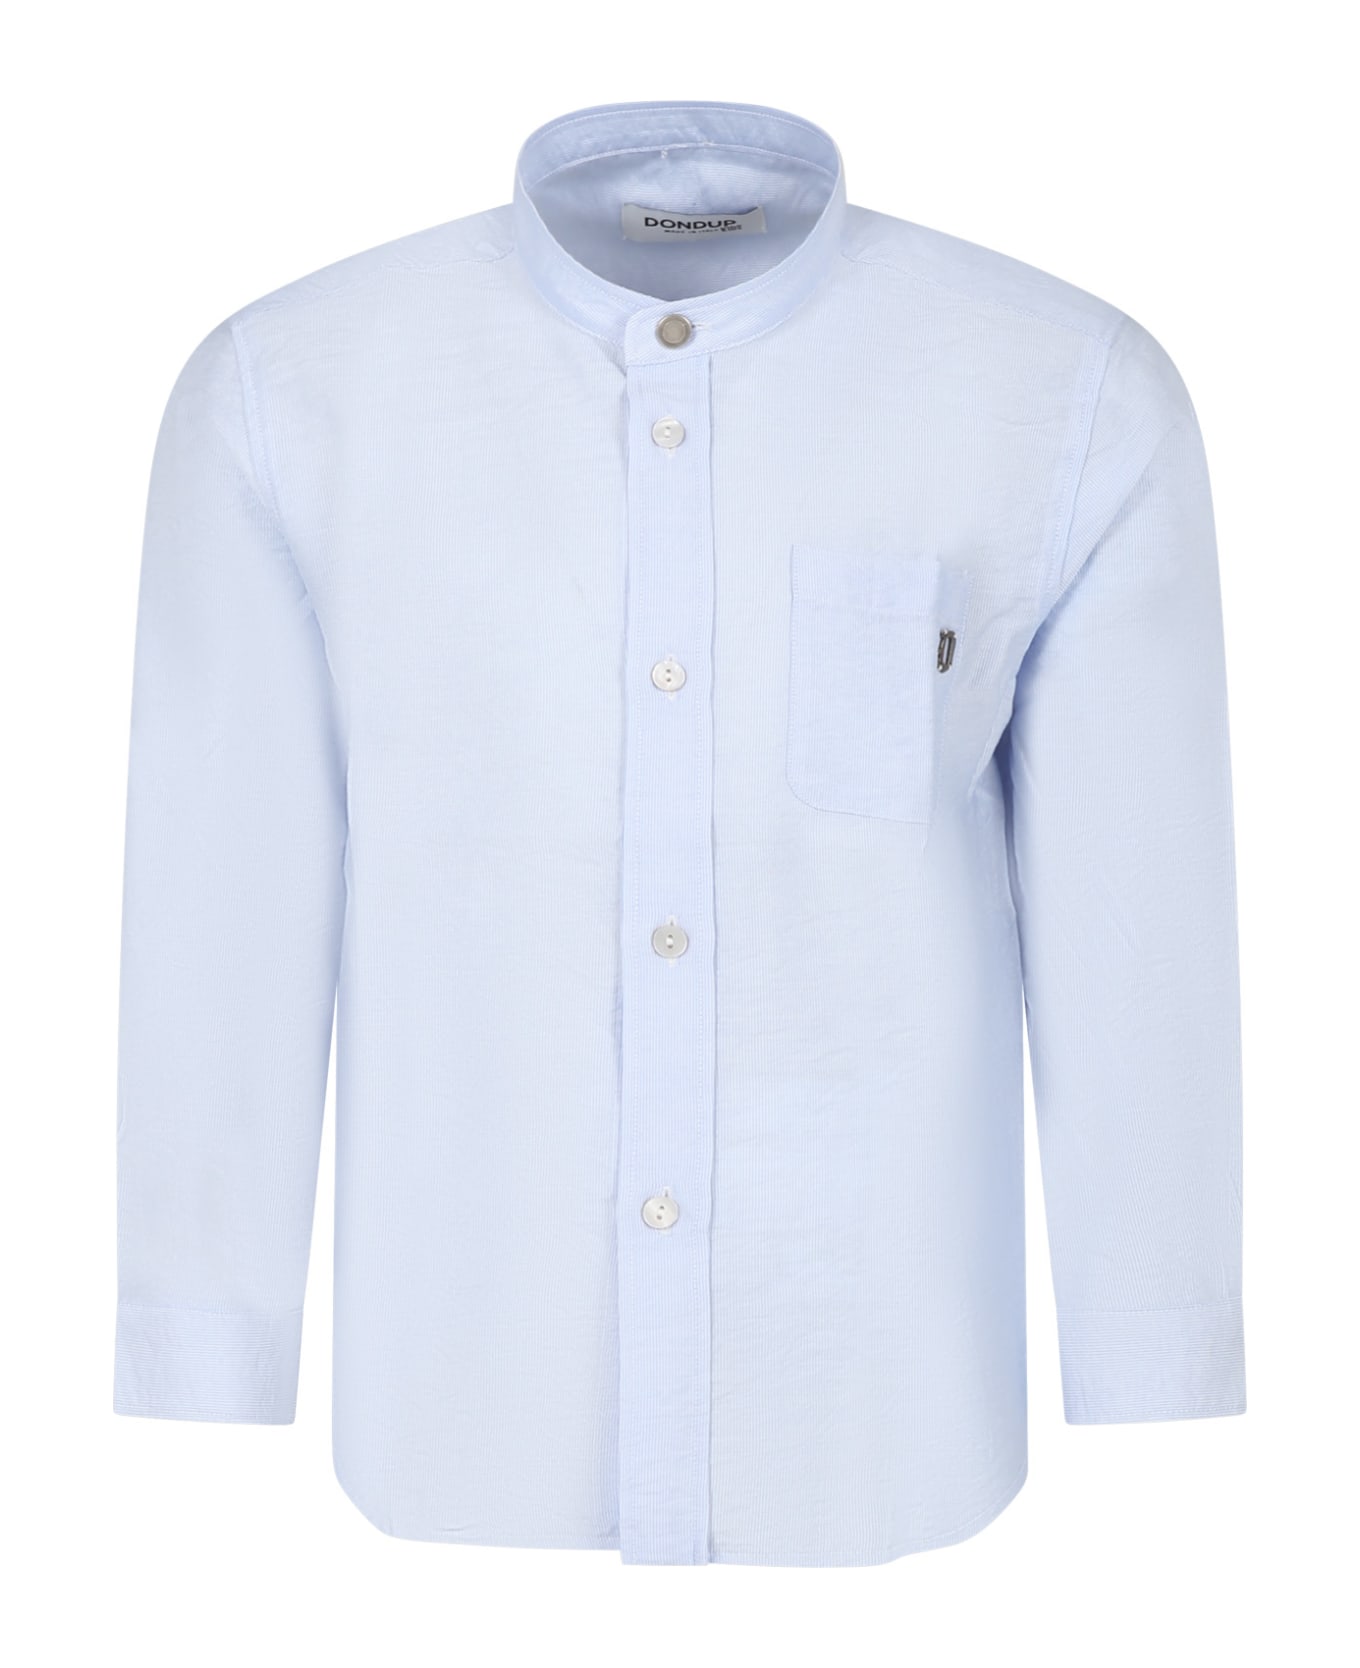 Dondup Light Blue Shirt For Boy With Logo - Light Blue シャツ